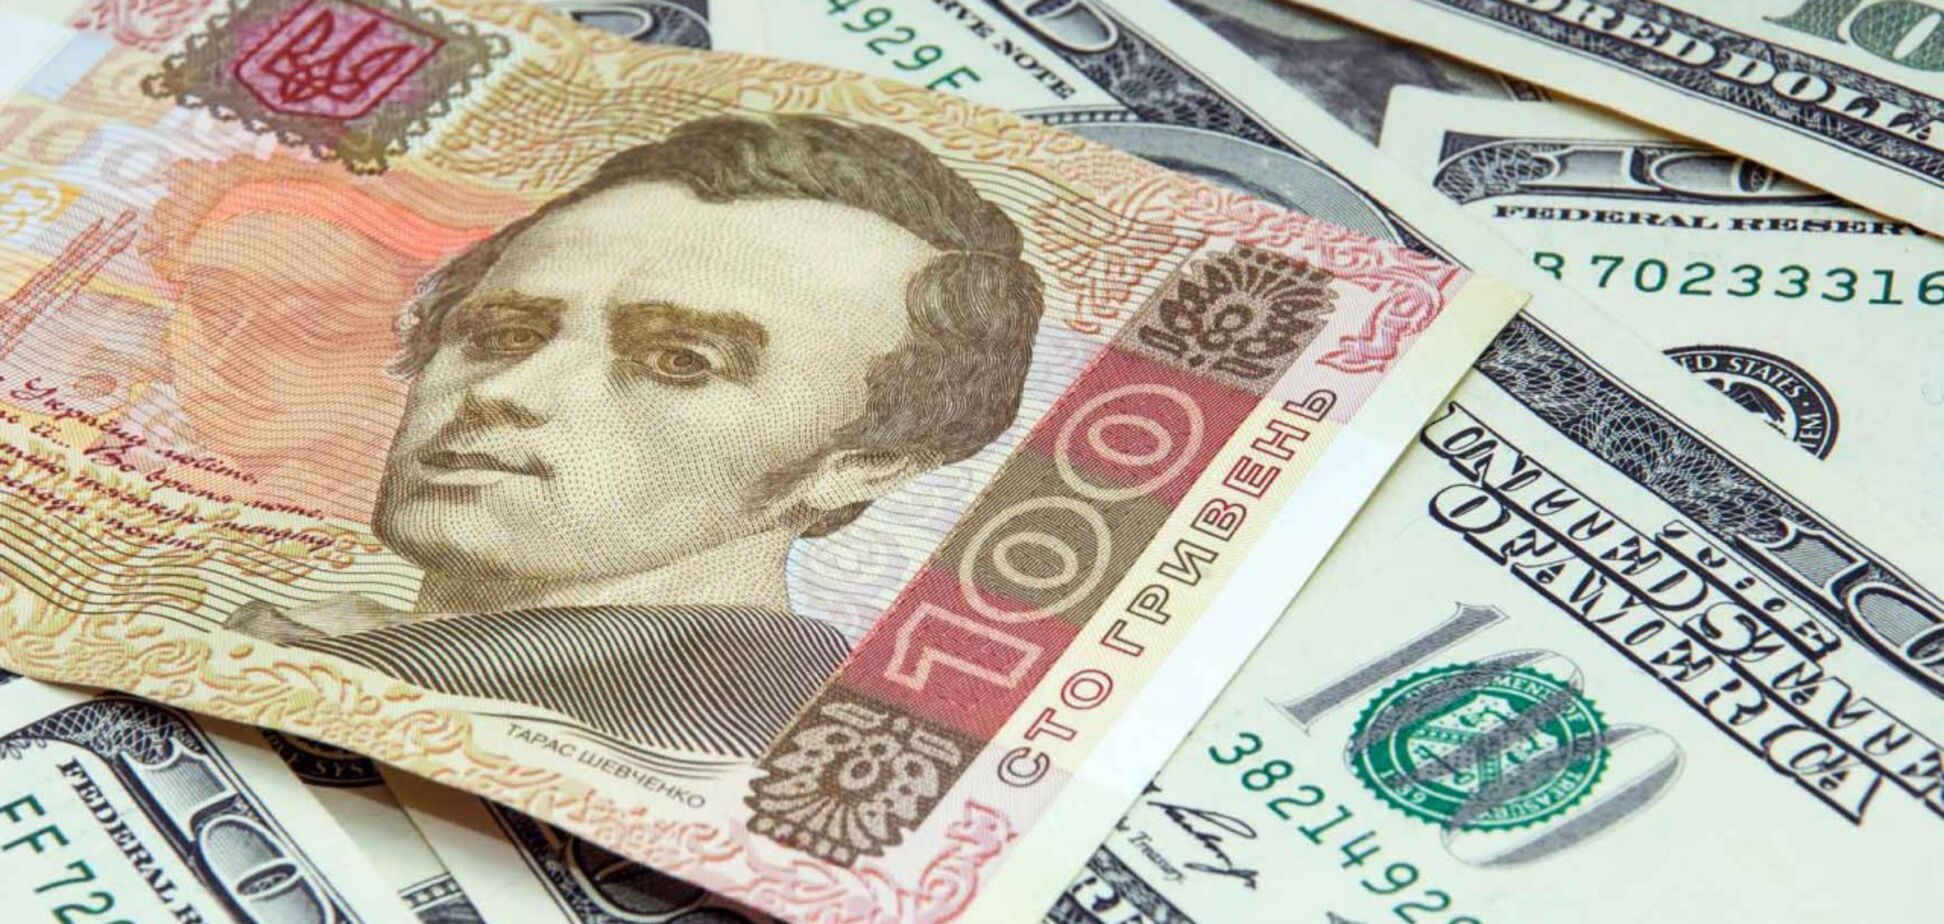 Курс доллара в Украине: озвучен прогноз до конца 2018 года